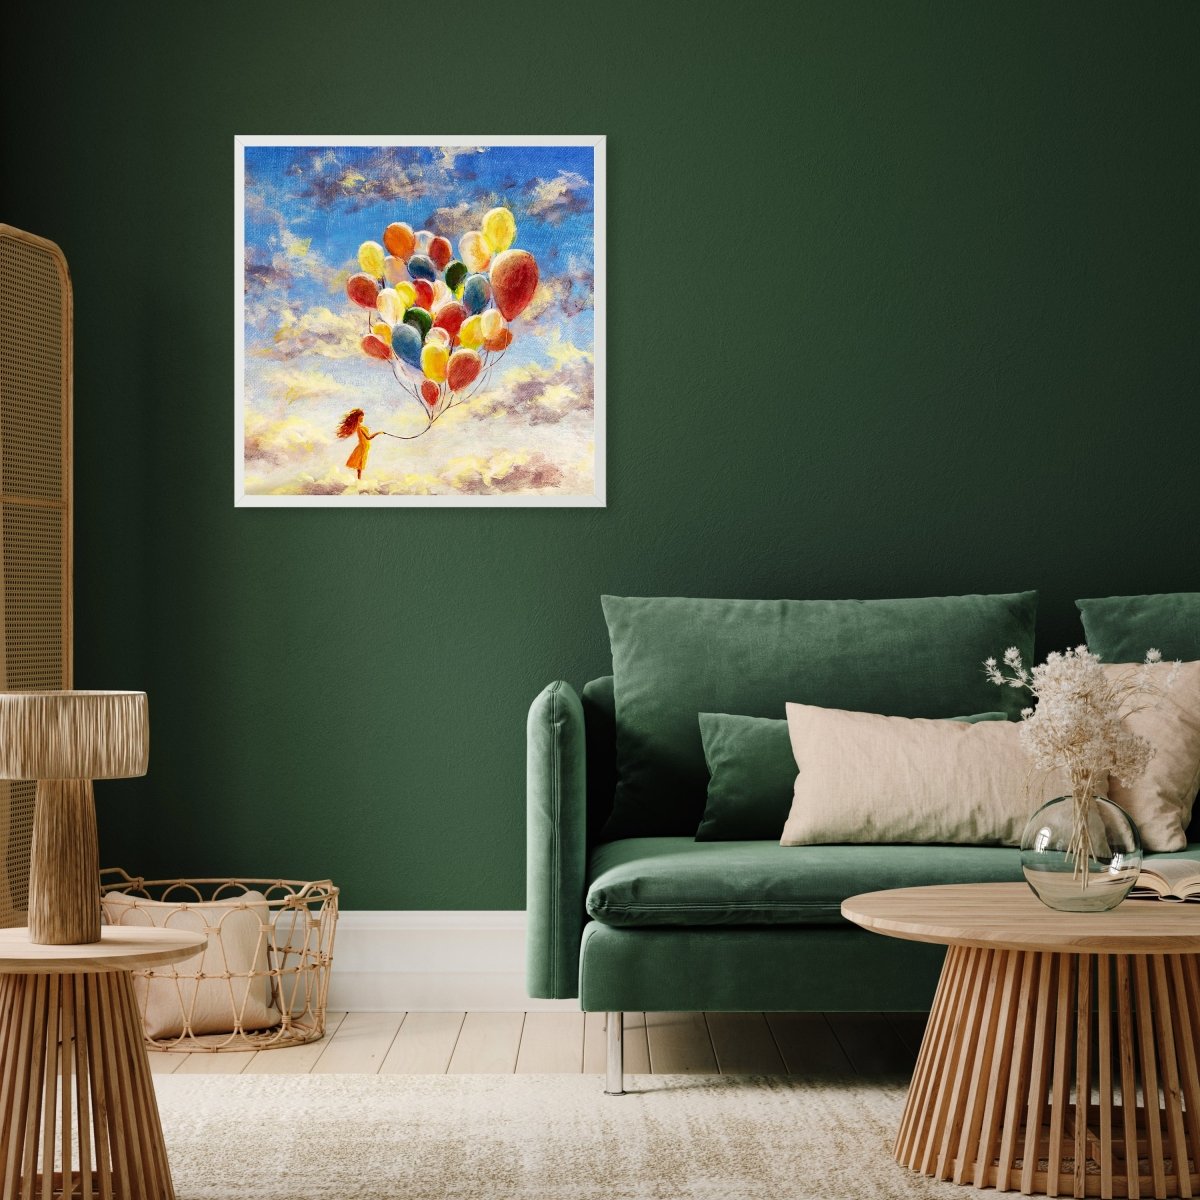 wandmotiv24 Poster, Poster - Gemälde, Malerei, Luftballons - M0236 - Bild 5